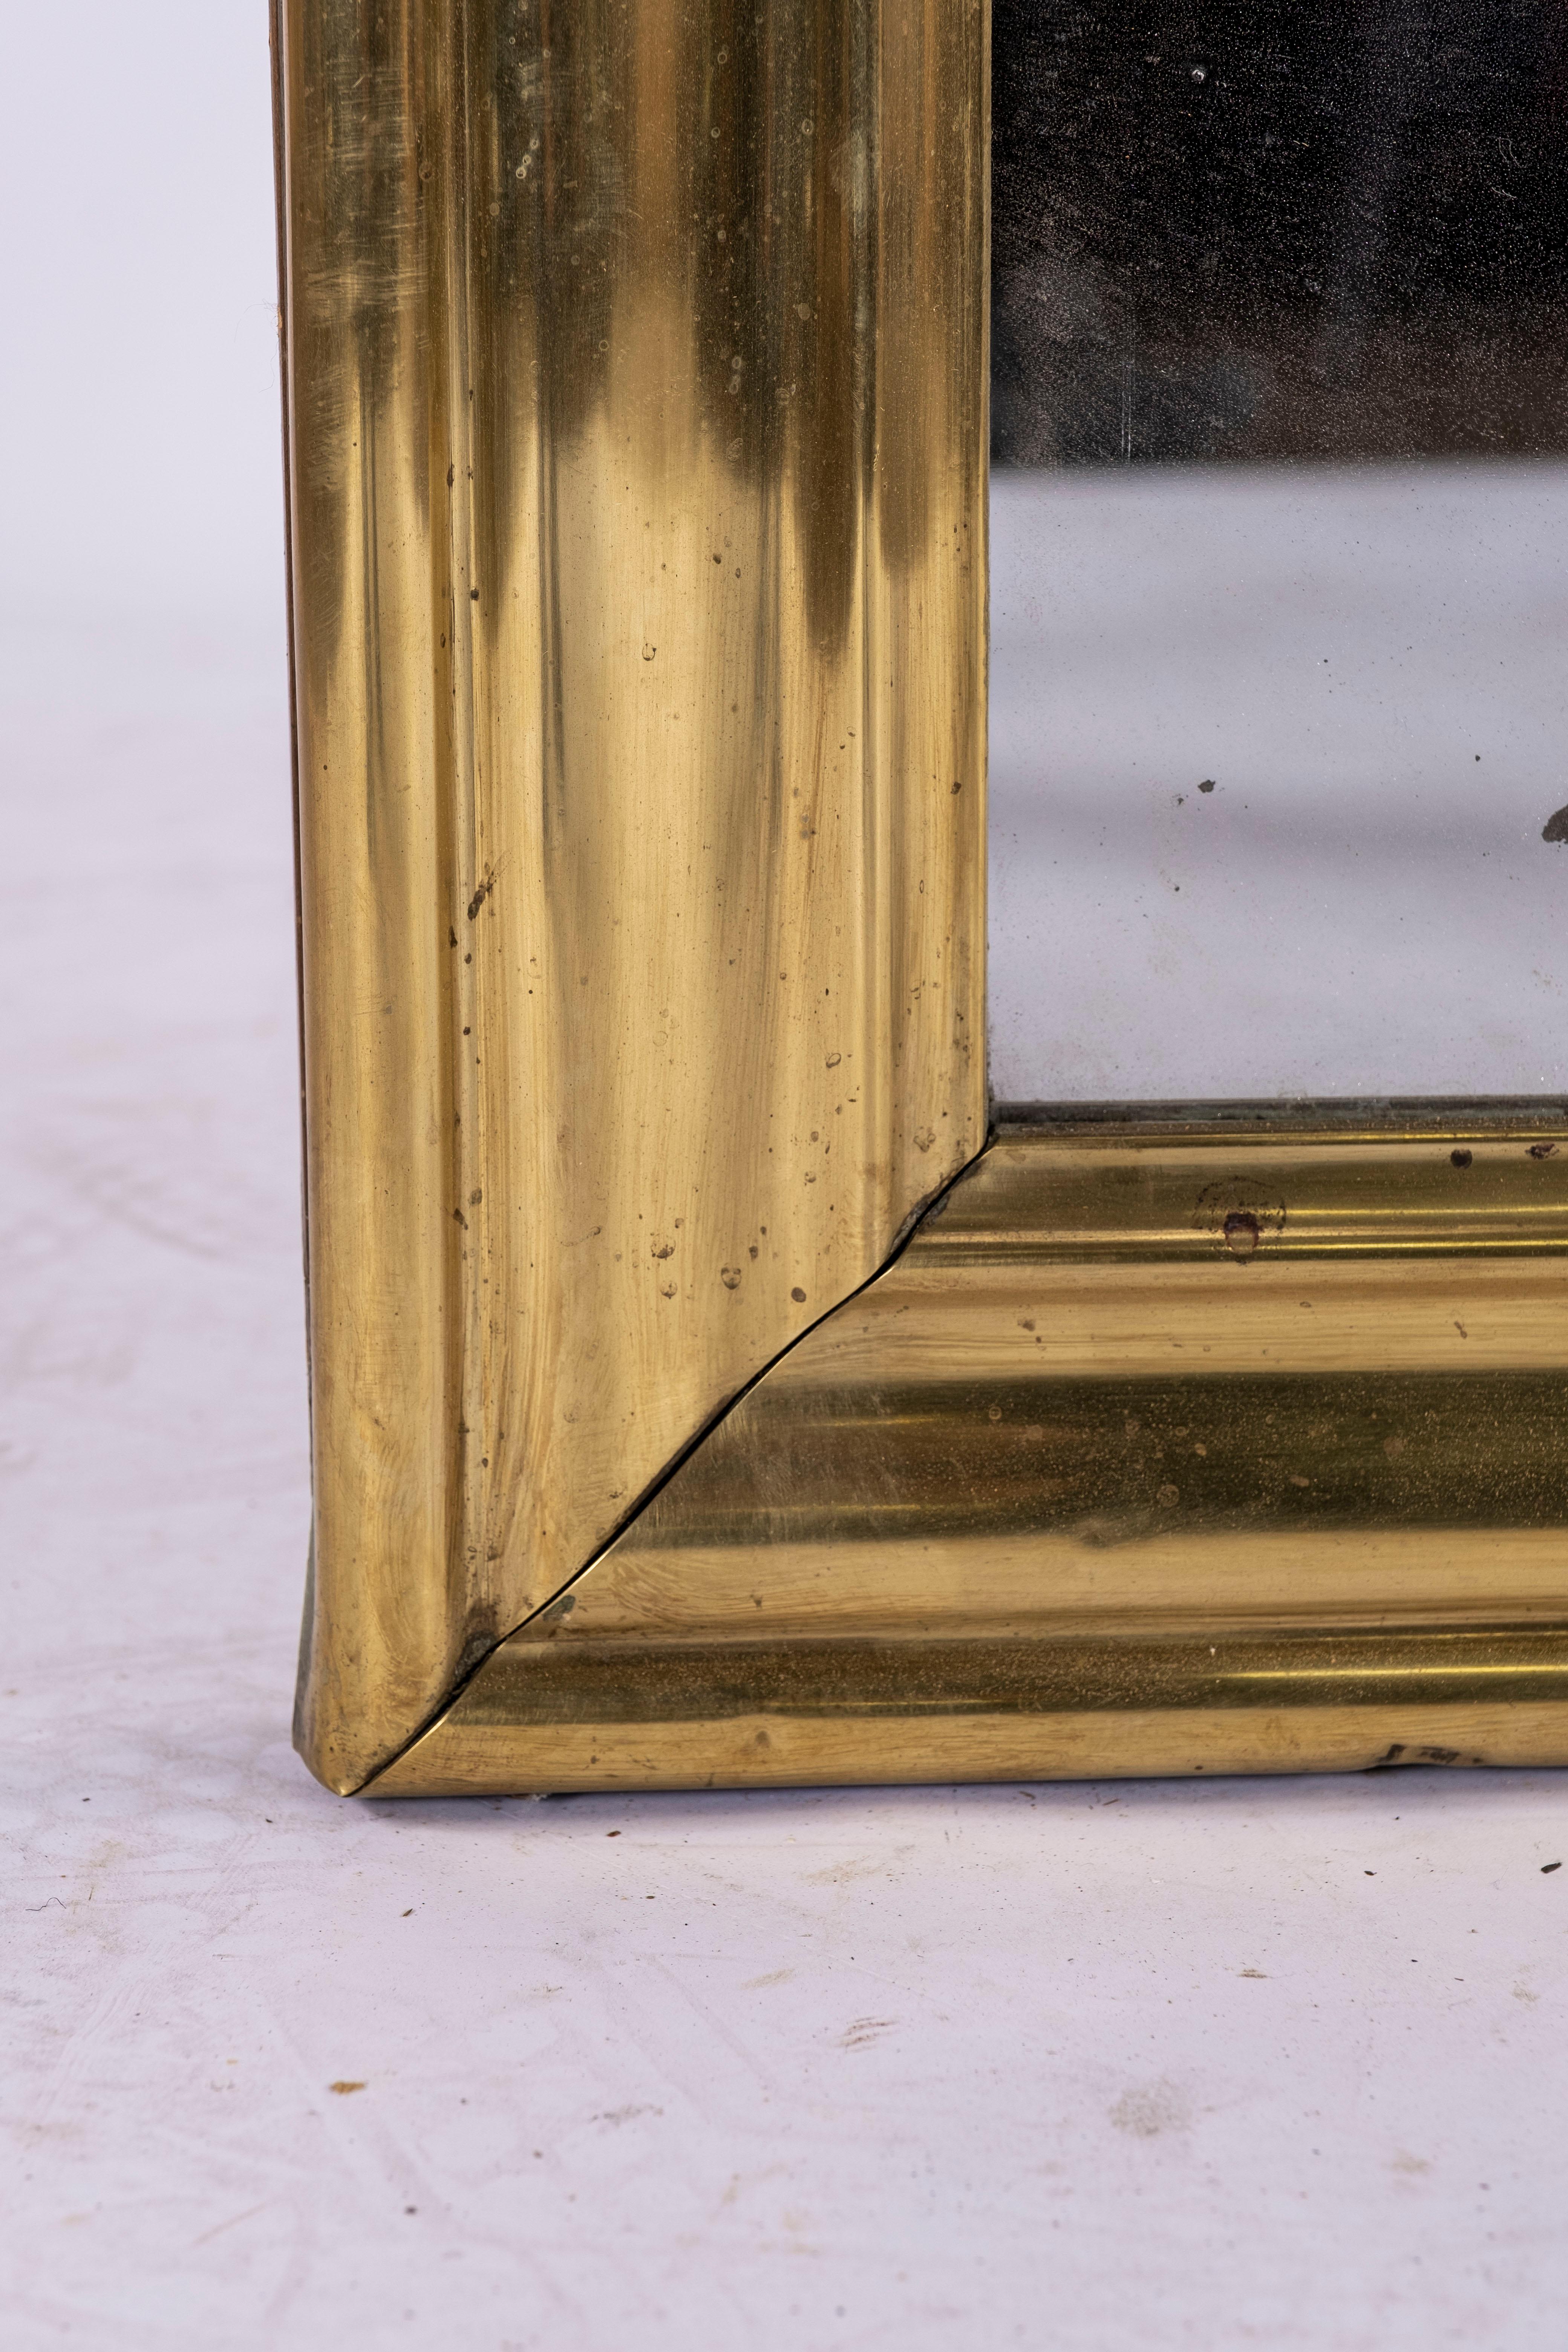 19th century brass bistro mirror from France. Original glass.